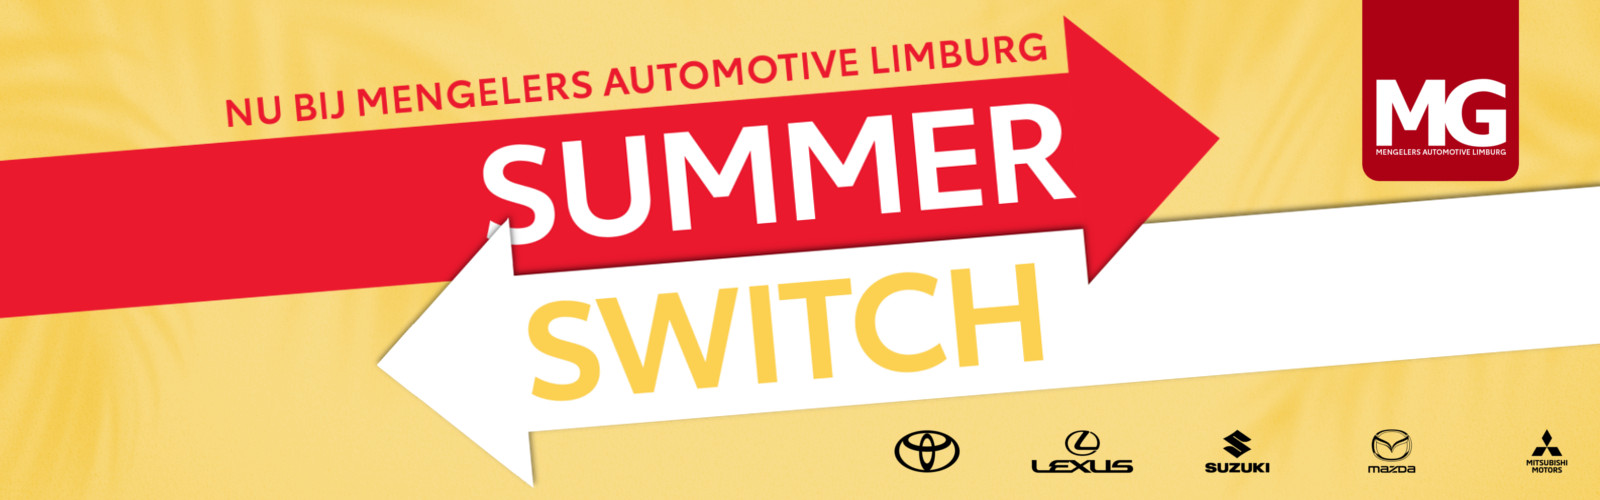 Mengelers Automotive Limburg - Summer Switch actiepagina